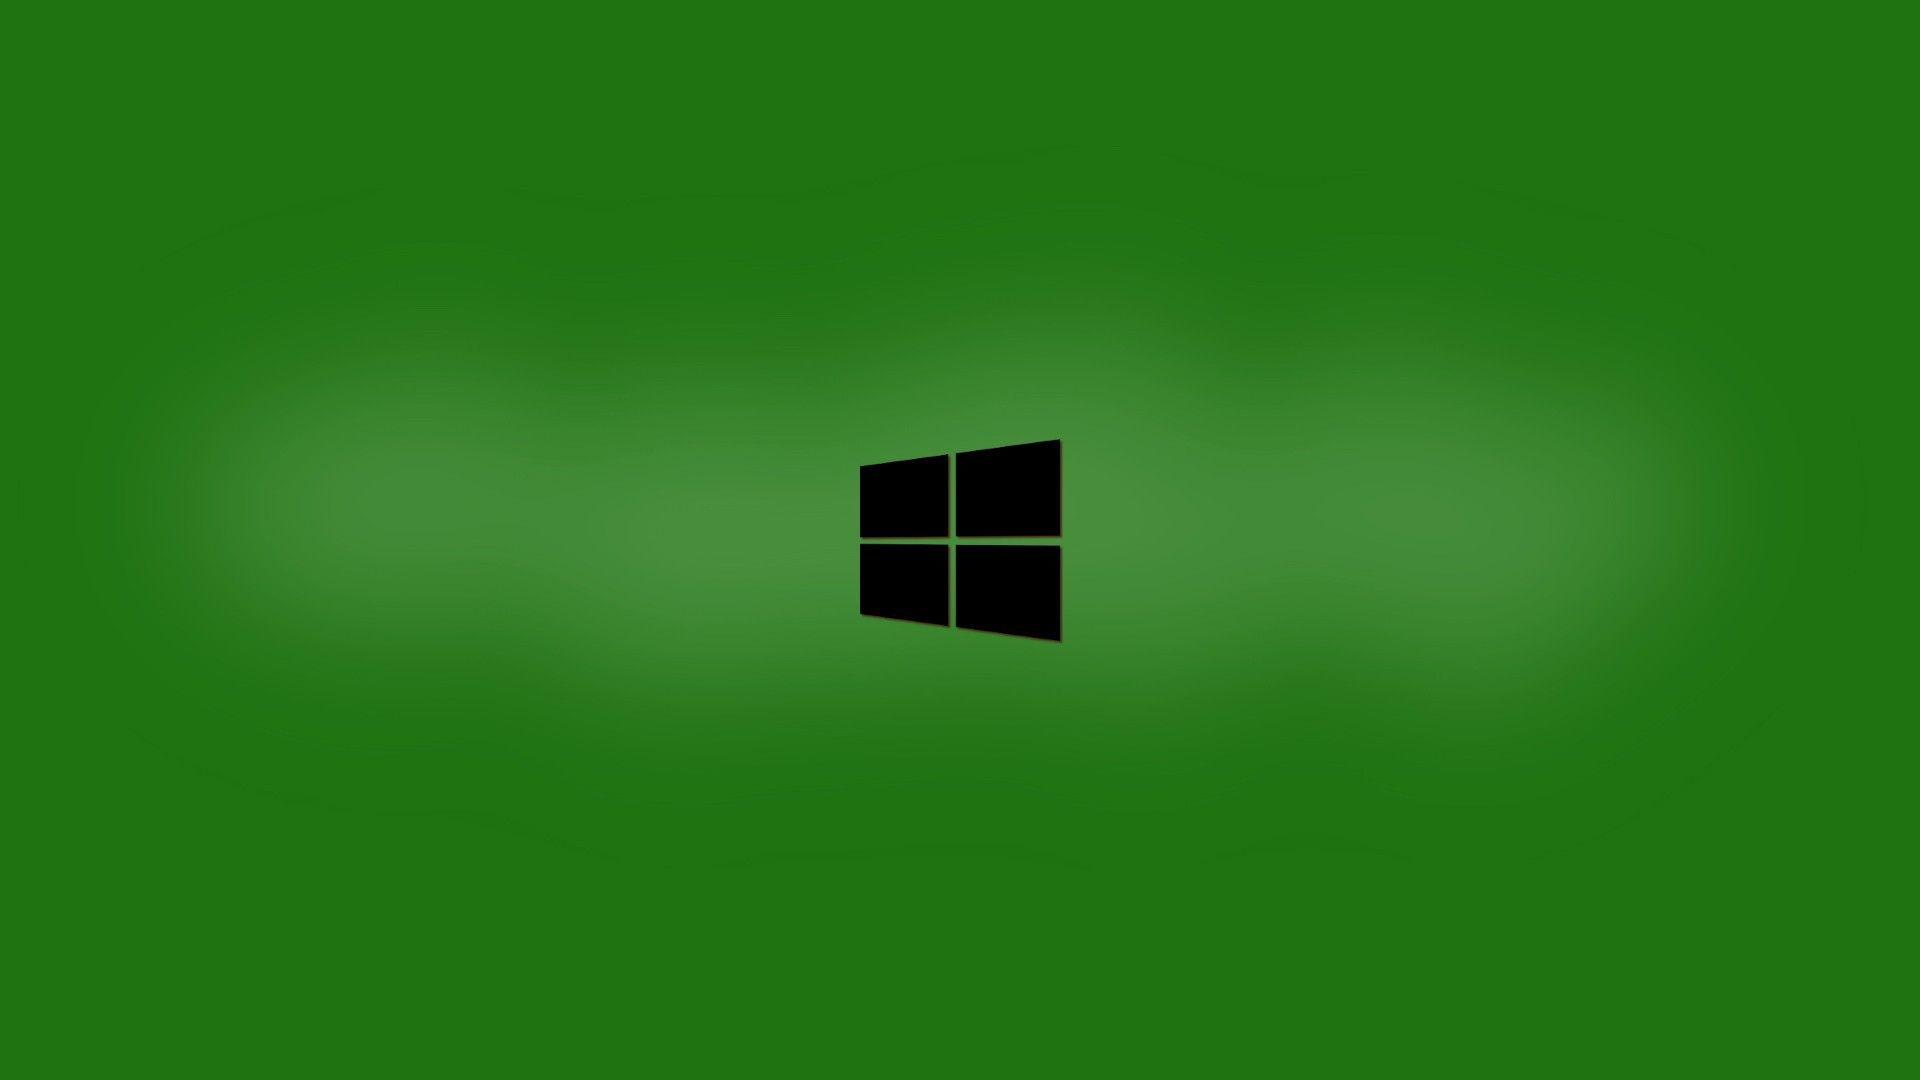 Windows 8 HD 1080p Wallpaper Download. HD Wallpaper Source